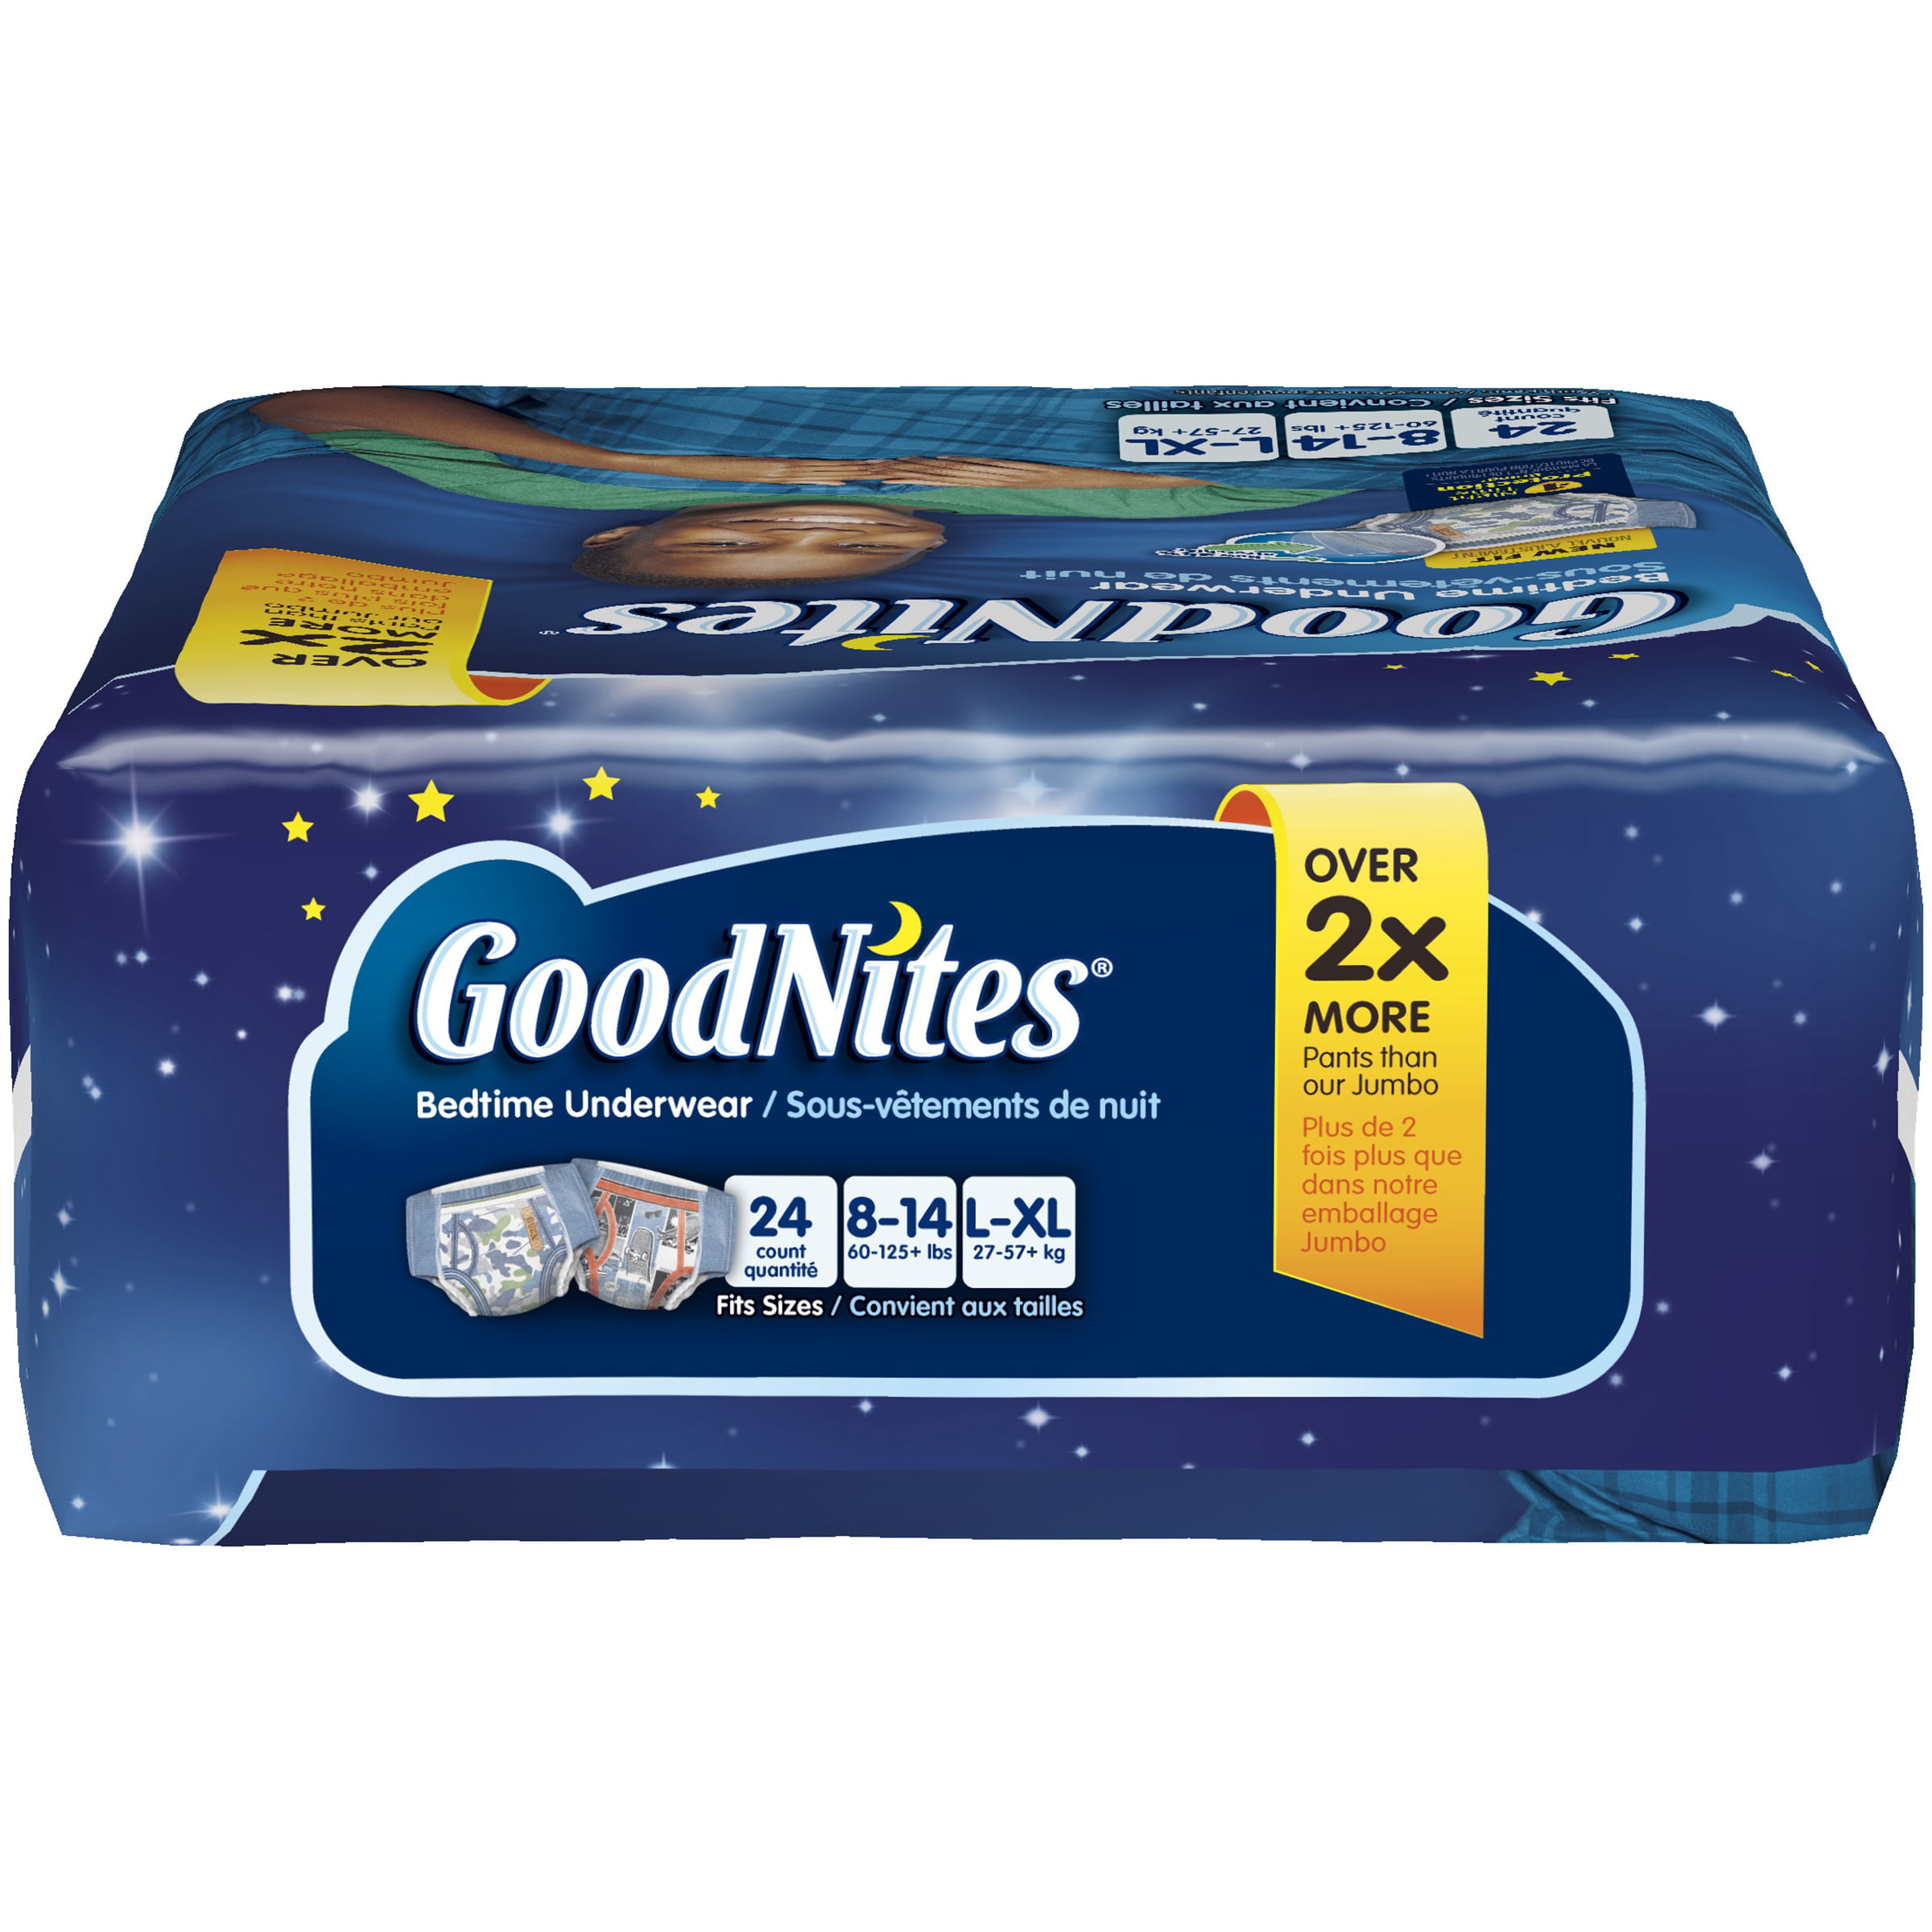 GoodNites Boys' Bedtime Underwear, Small/Medium, 31 count 